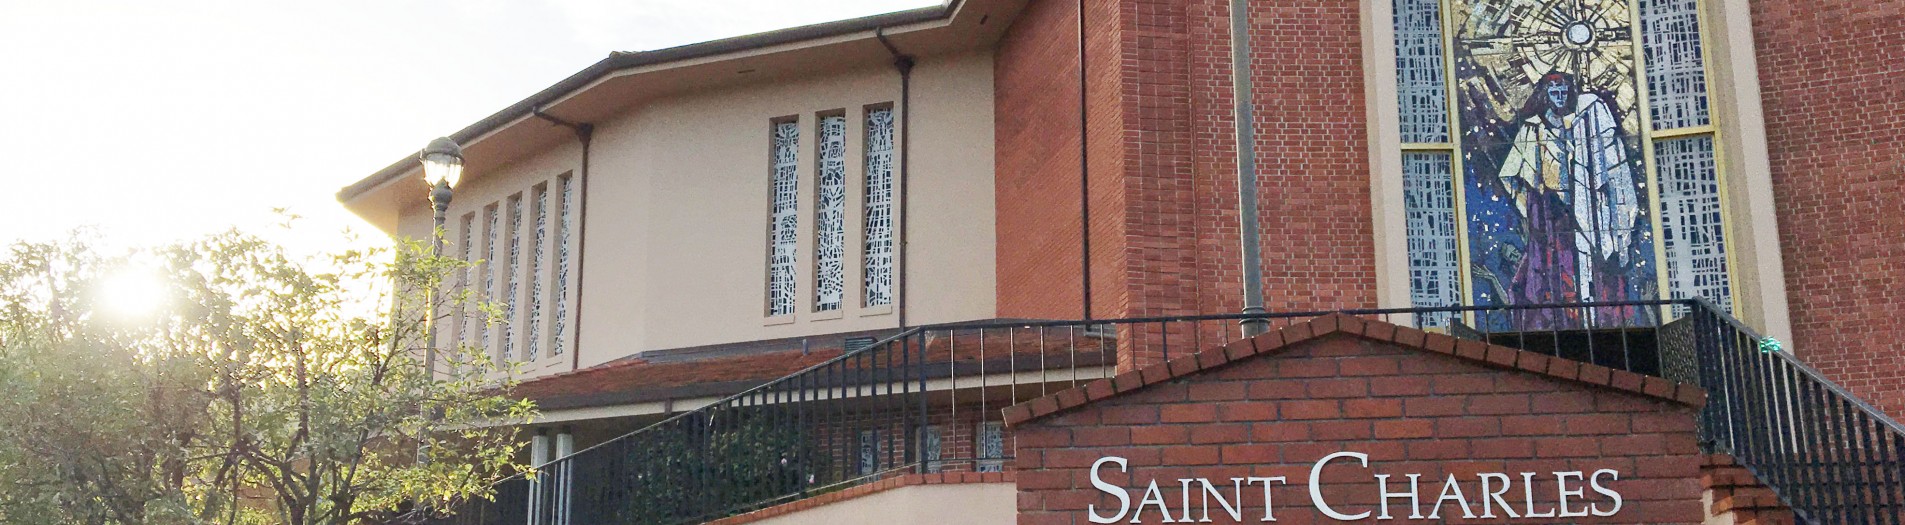 St Charles Catholic Church in San Carlos, CA